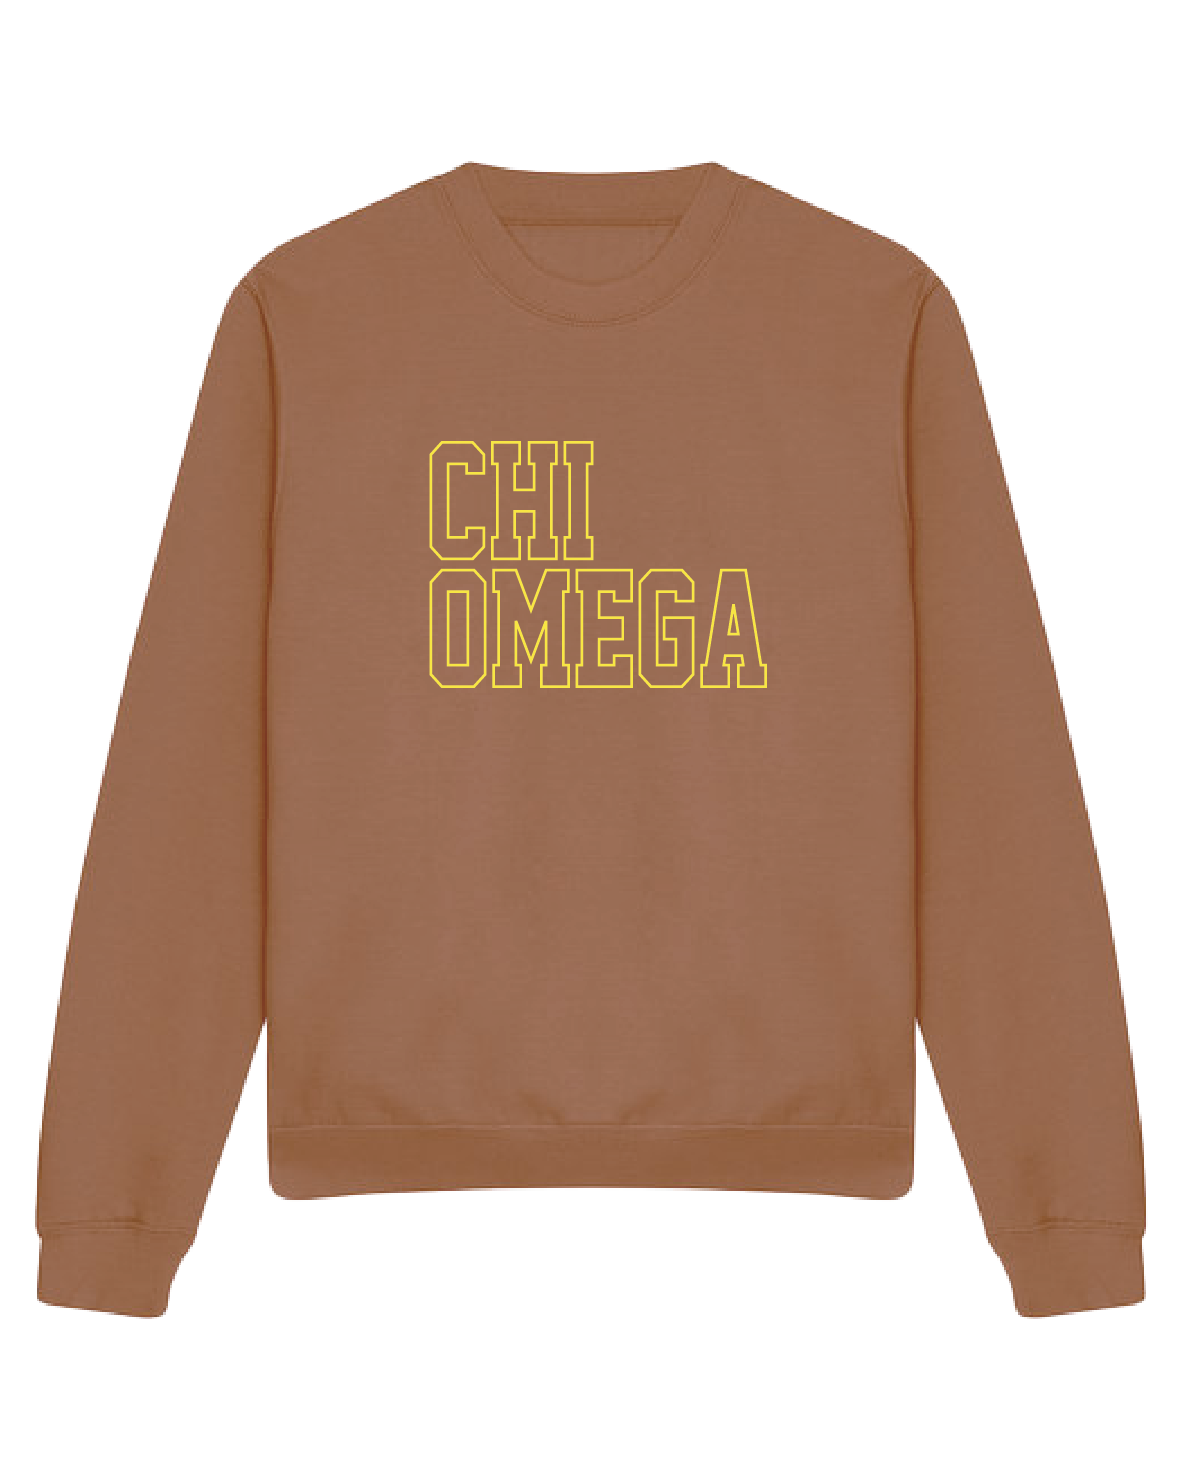 WS - Chi Omega Block Crewneck (min qty 6) $32 / $70